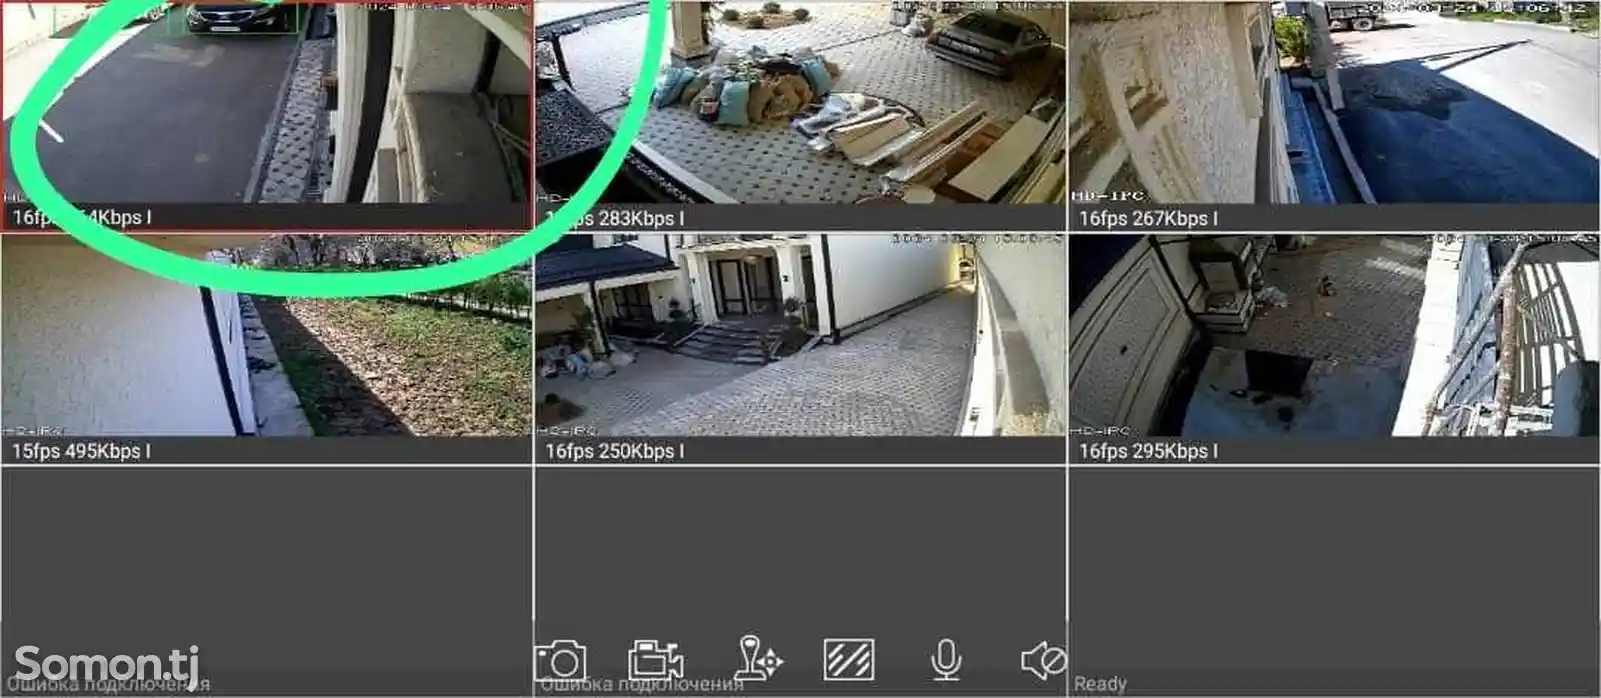 Услуги по установке камер видеонаблюдения с гарантией-11